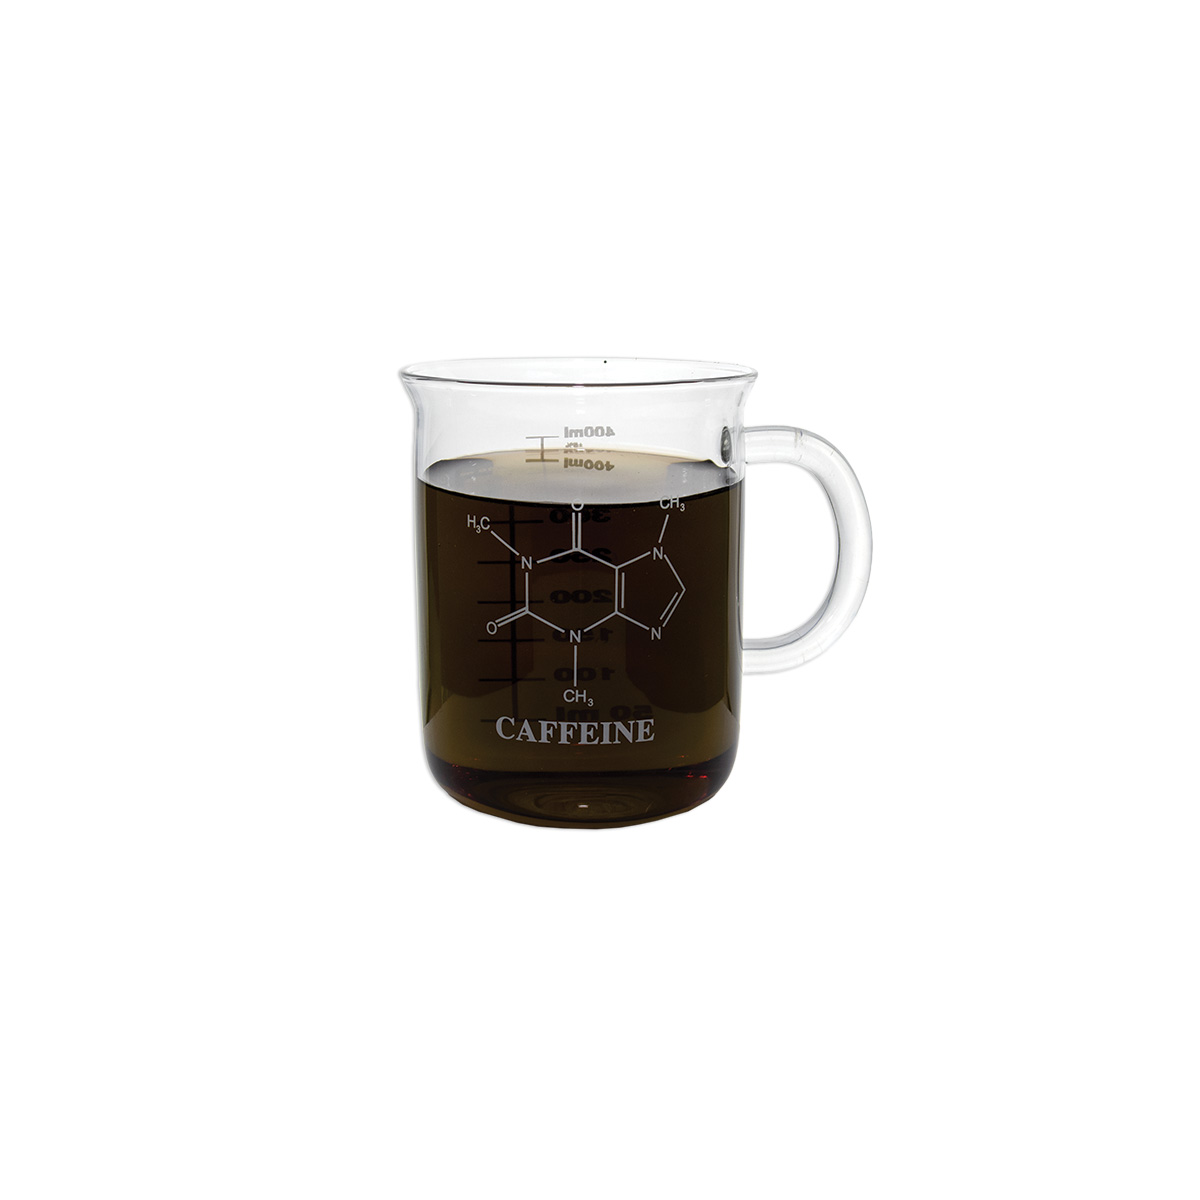 Caffeine Beaker Mug Graduated Beaker Mug with Handle Borosilicate Glass Cup